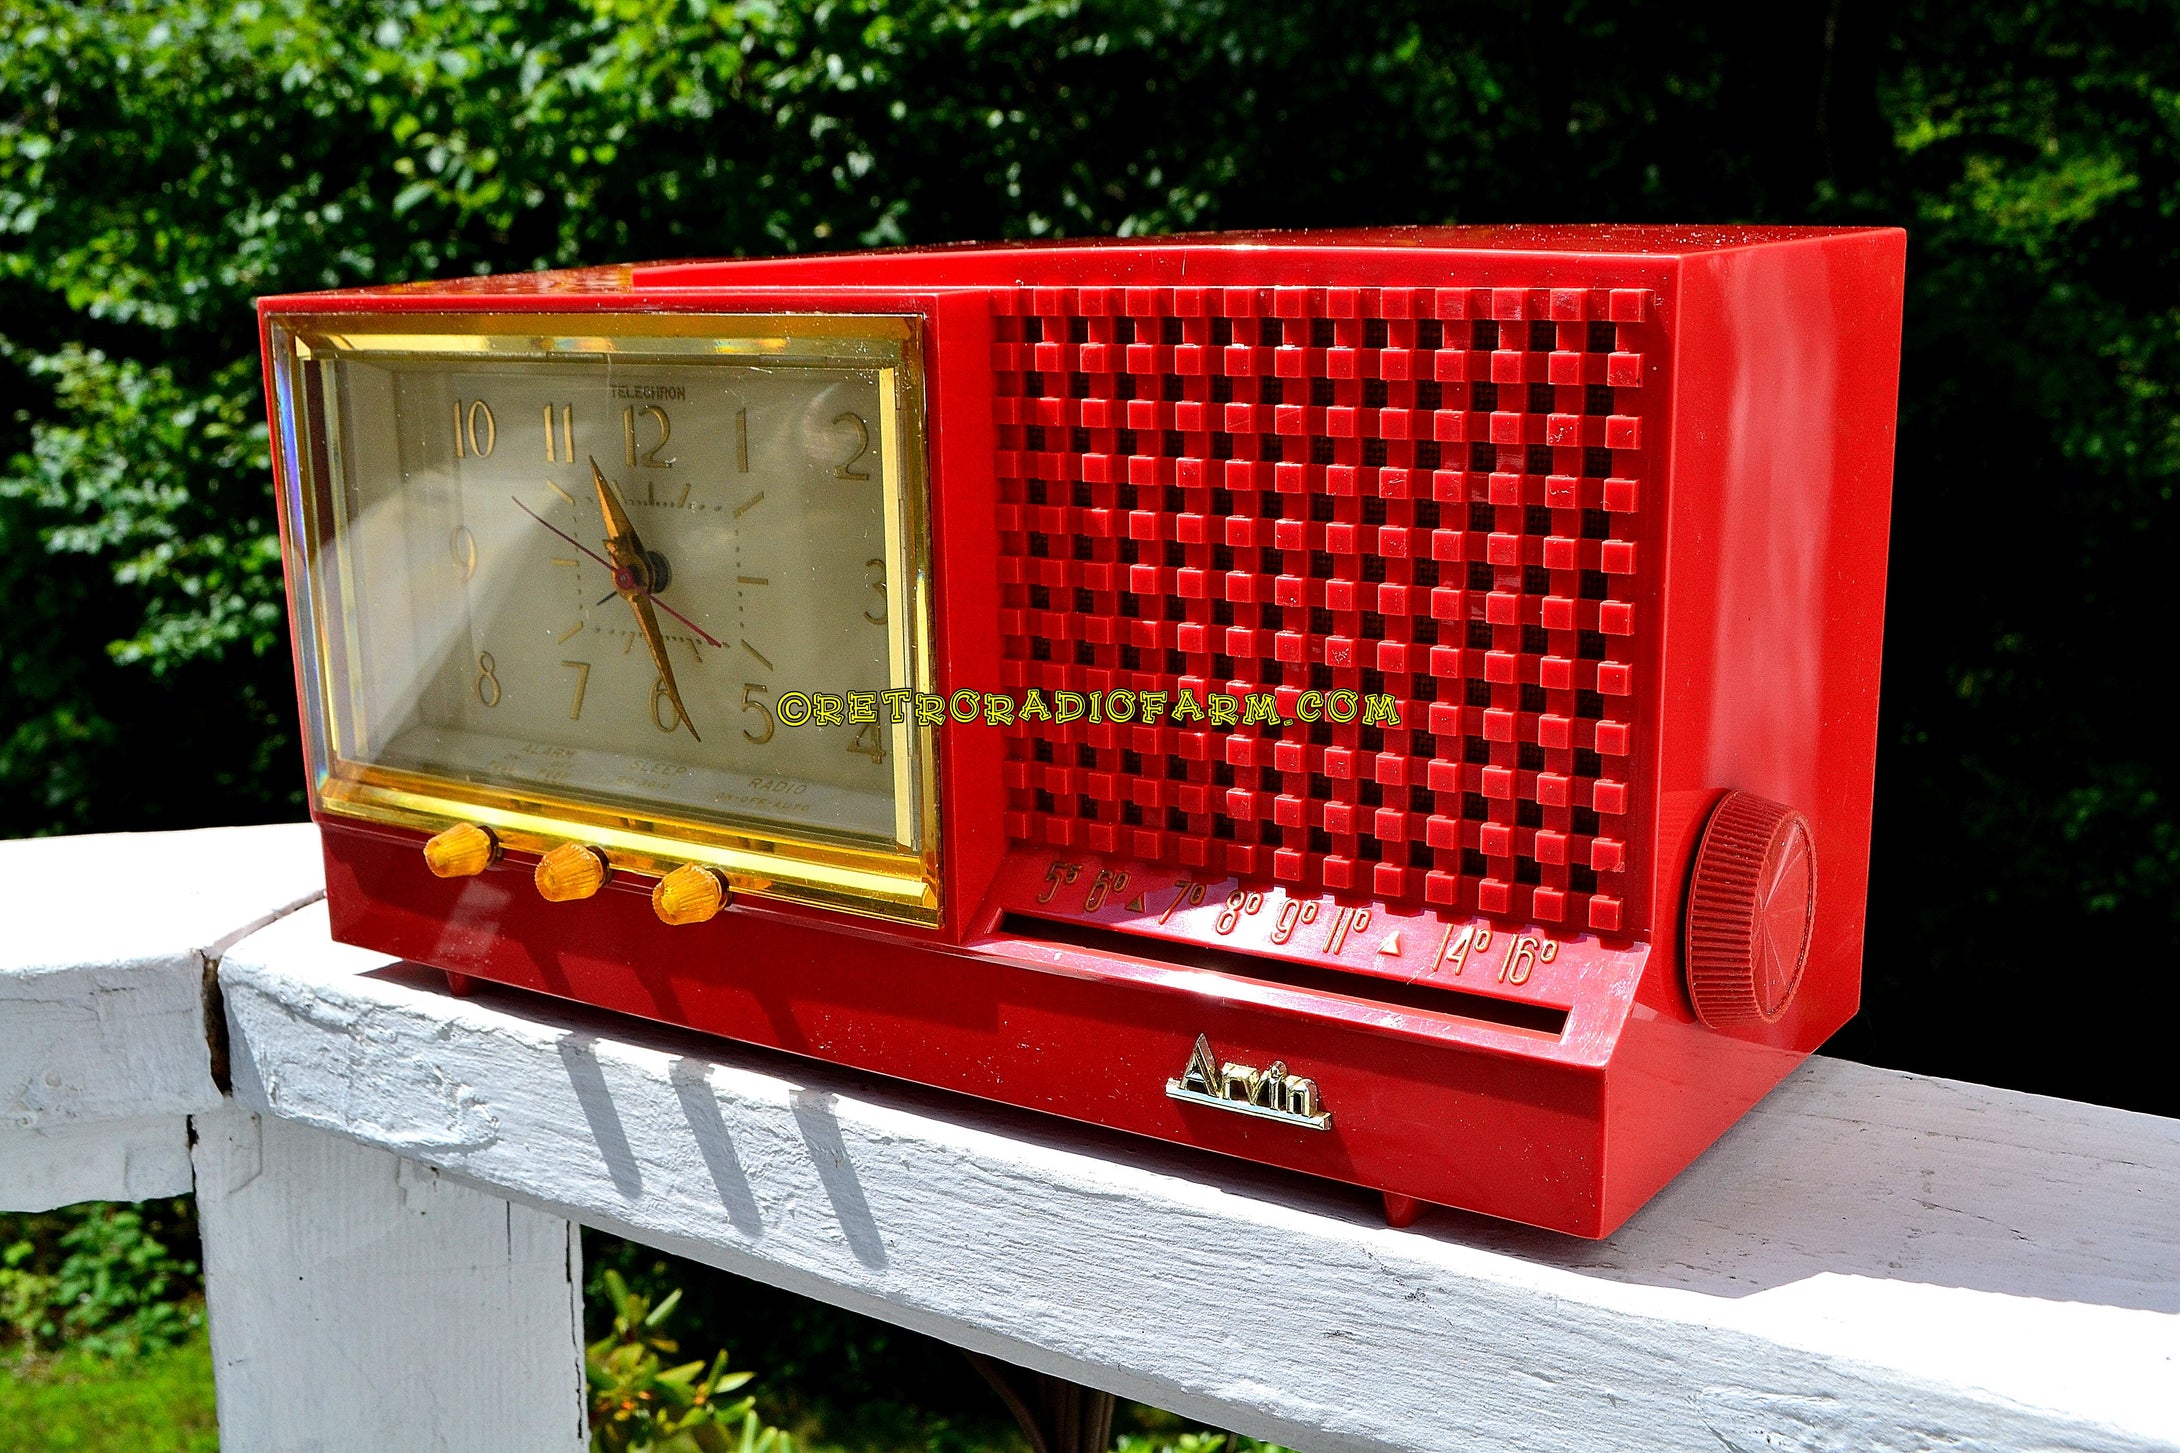 SOLD! - Dec 9, 2017 - CORAL Pink Mid Century Retro Vintage 1959 Arvin Model 957T AM Tube Clock Radio Works Great! - [product_type} - Arvin - Retro Radio Farm